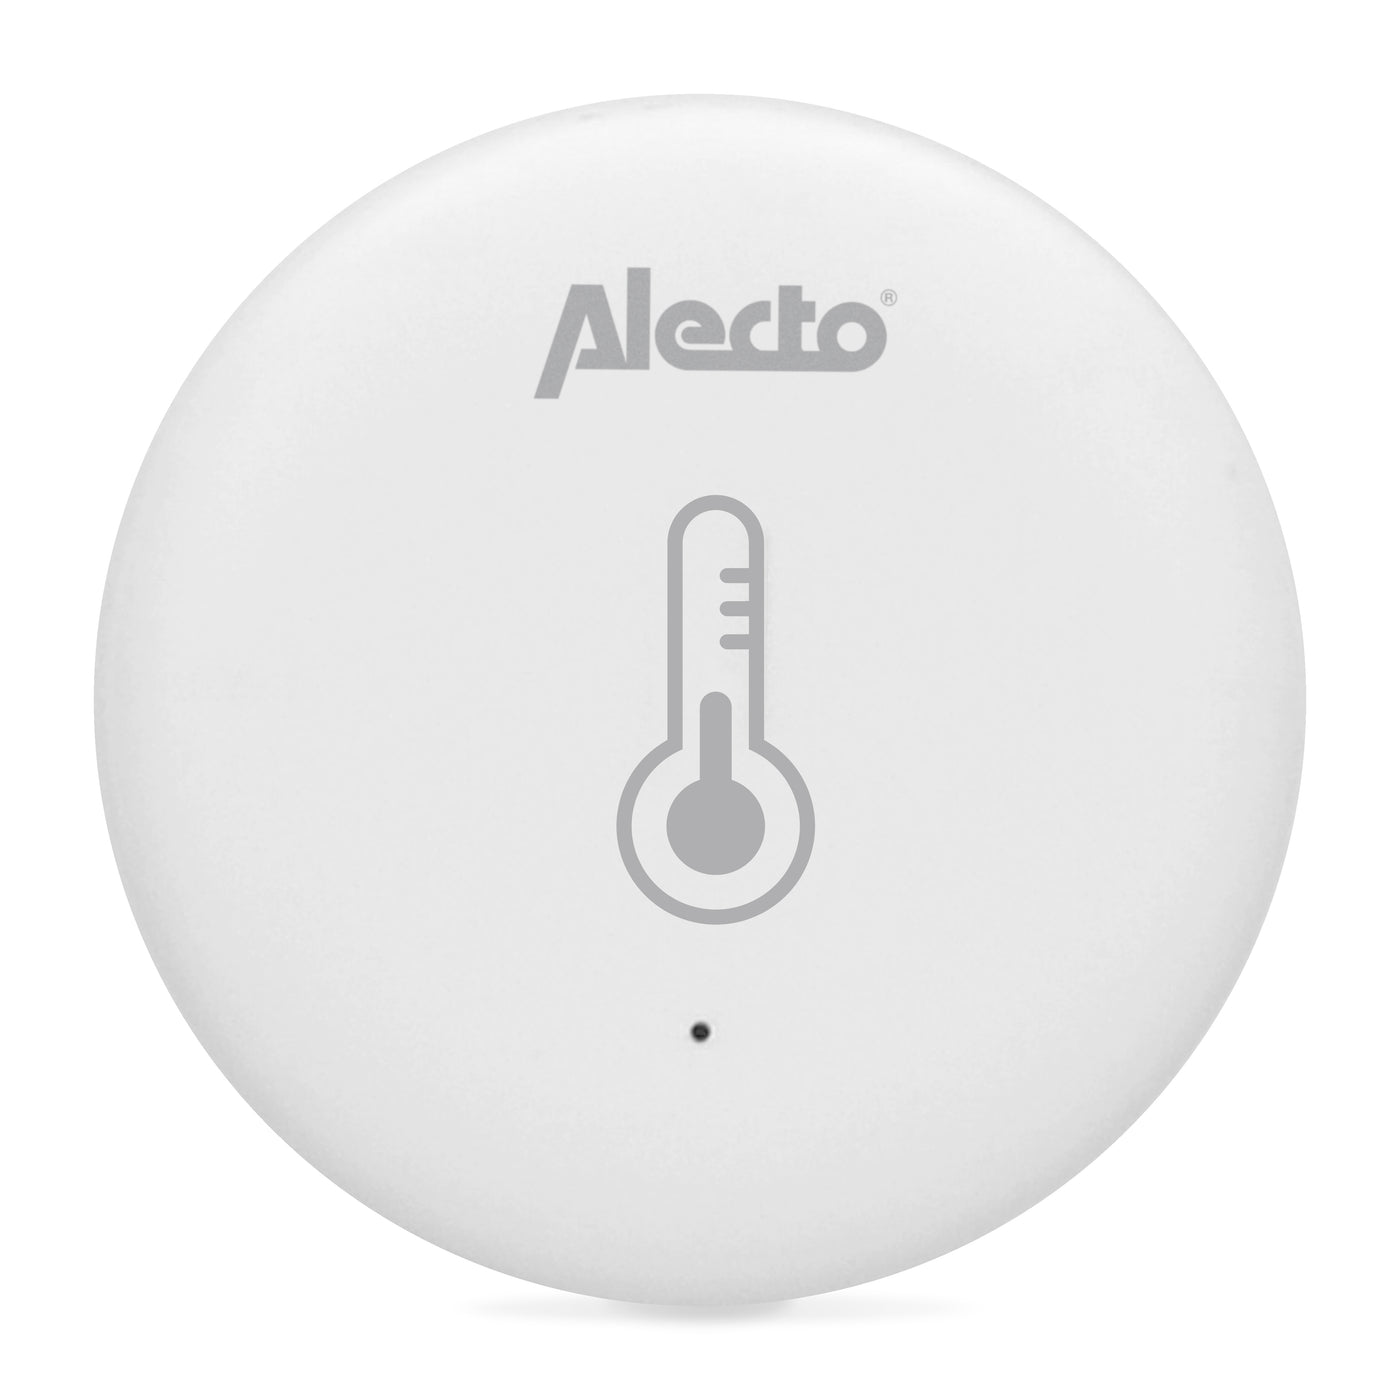 Alecto SMART-TEMP10 - Smart Zigbee temperature and humidity sensor